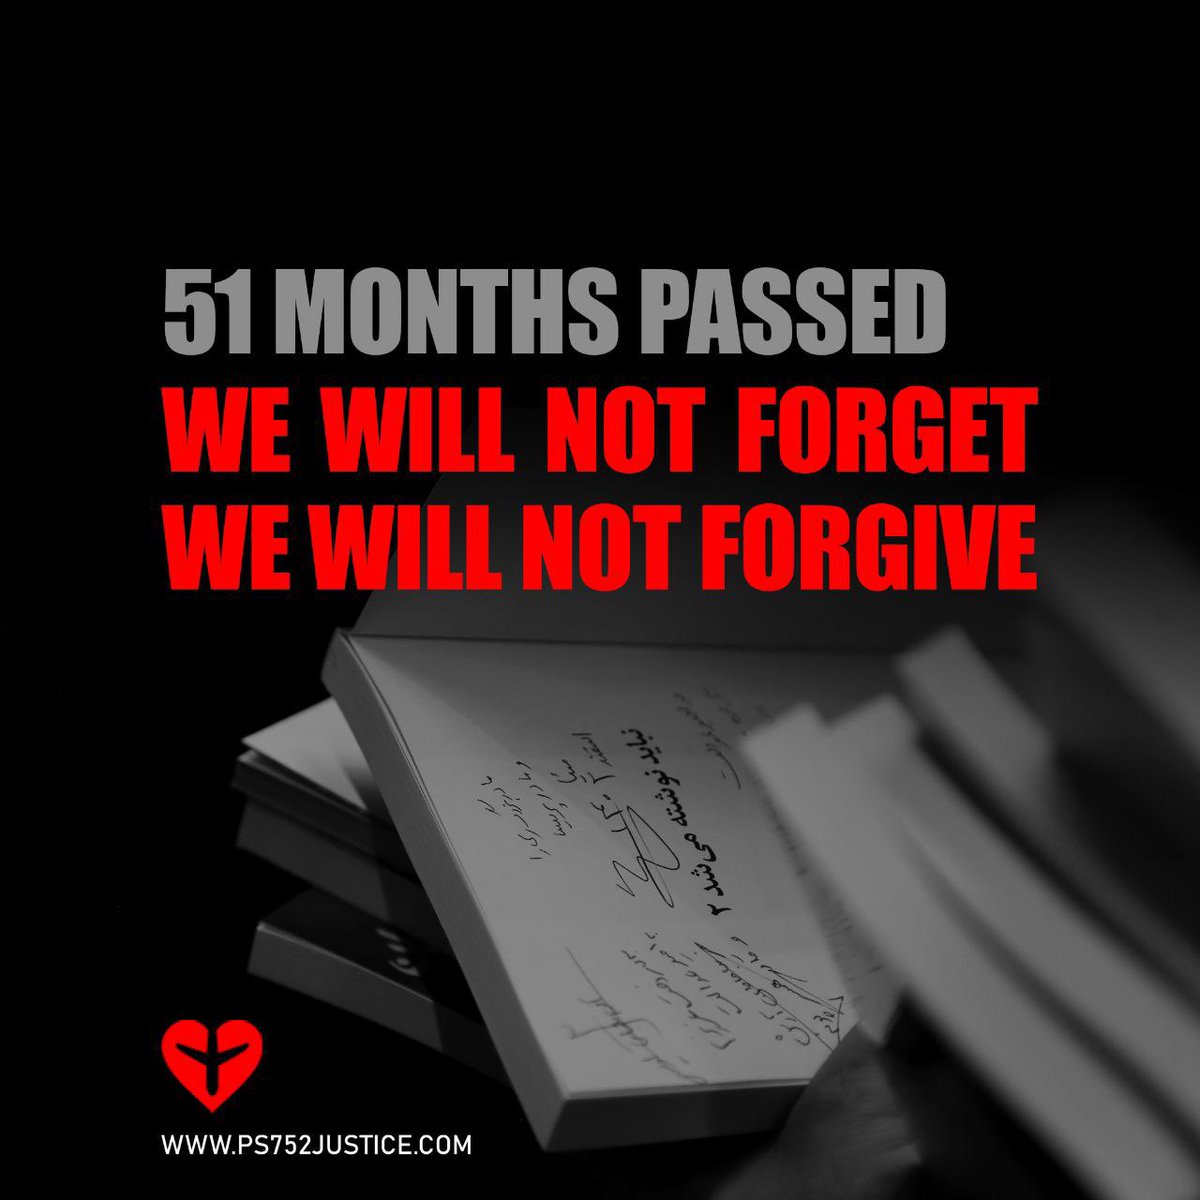 ۵۱ ماه گذشت.

#نه_میبخشیم_نه_فراموش_میکنیم 
#دادخواهی #ps752justice #PS752